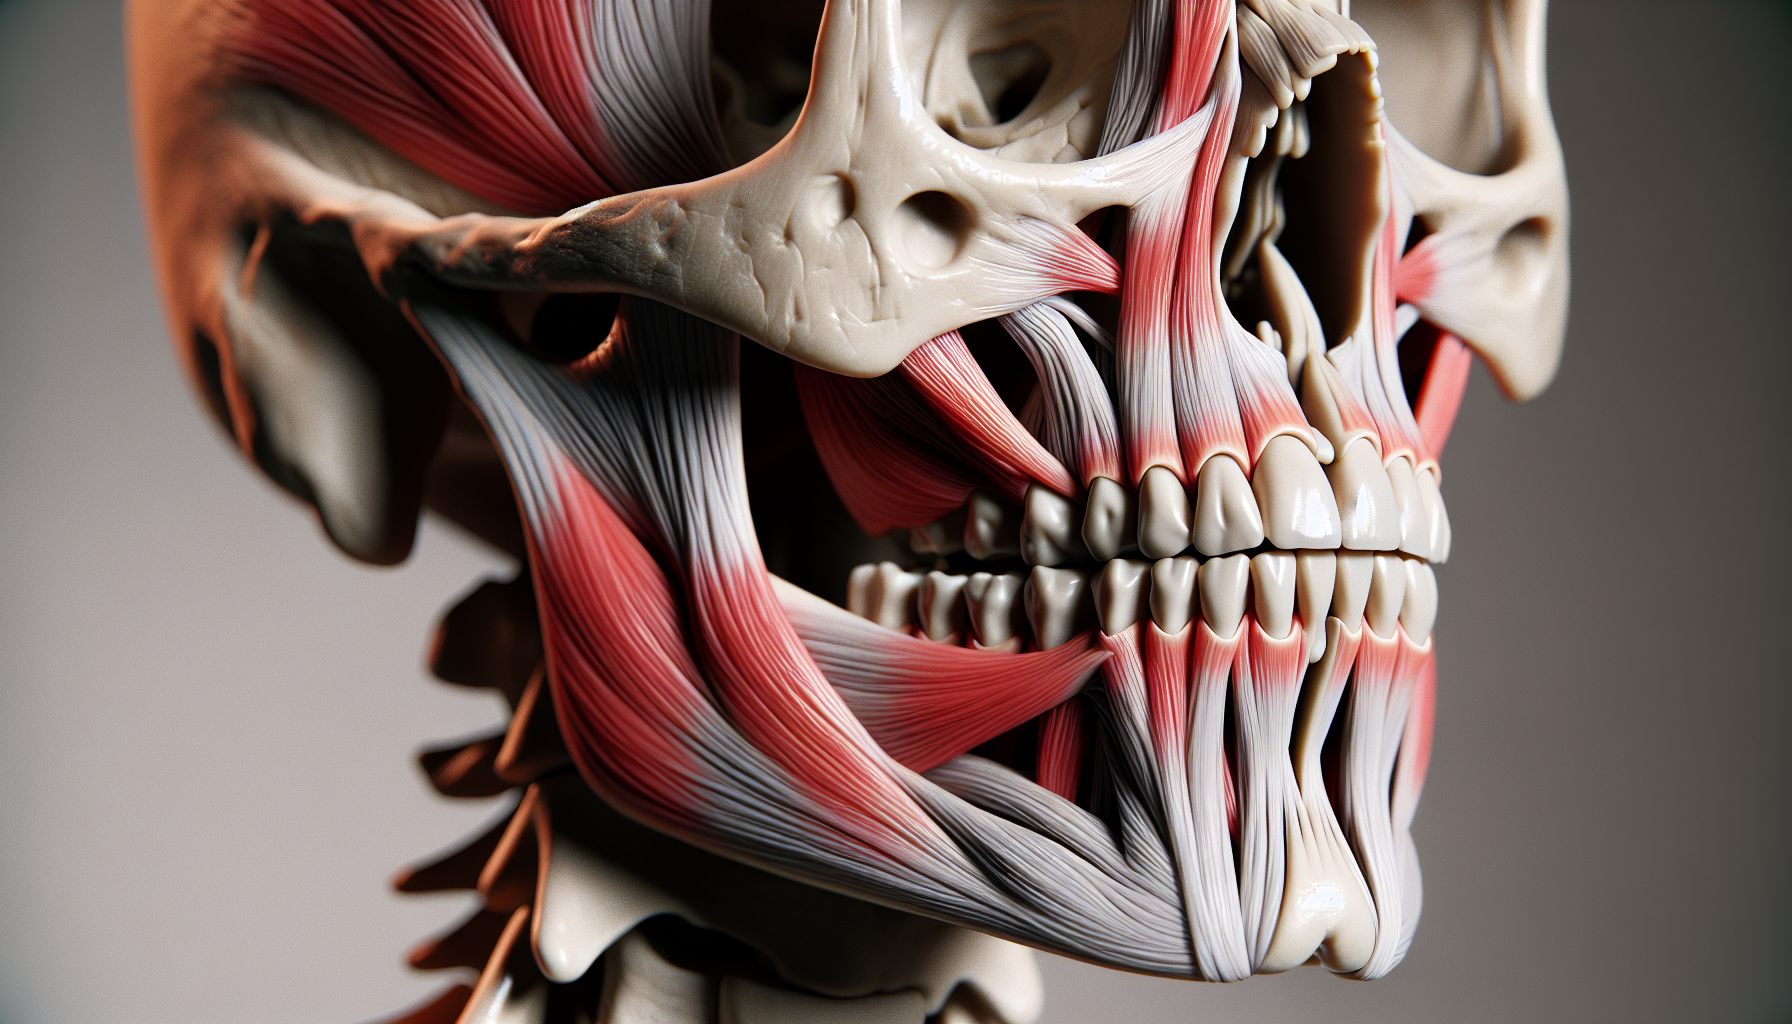 Illustration of the temporomandibular joint and surrounding muscles